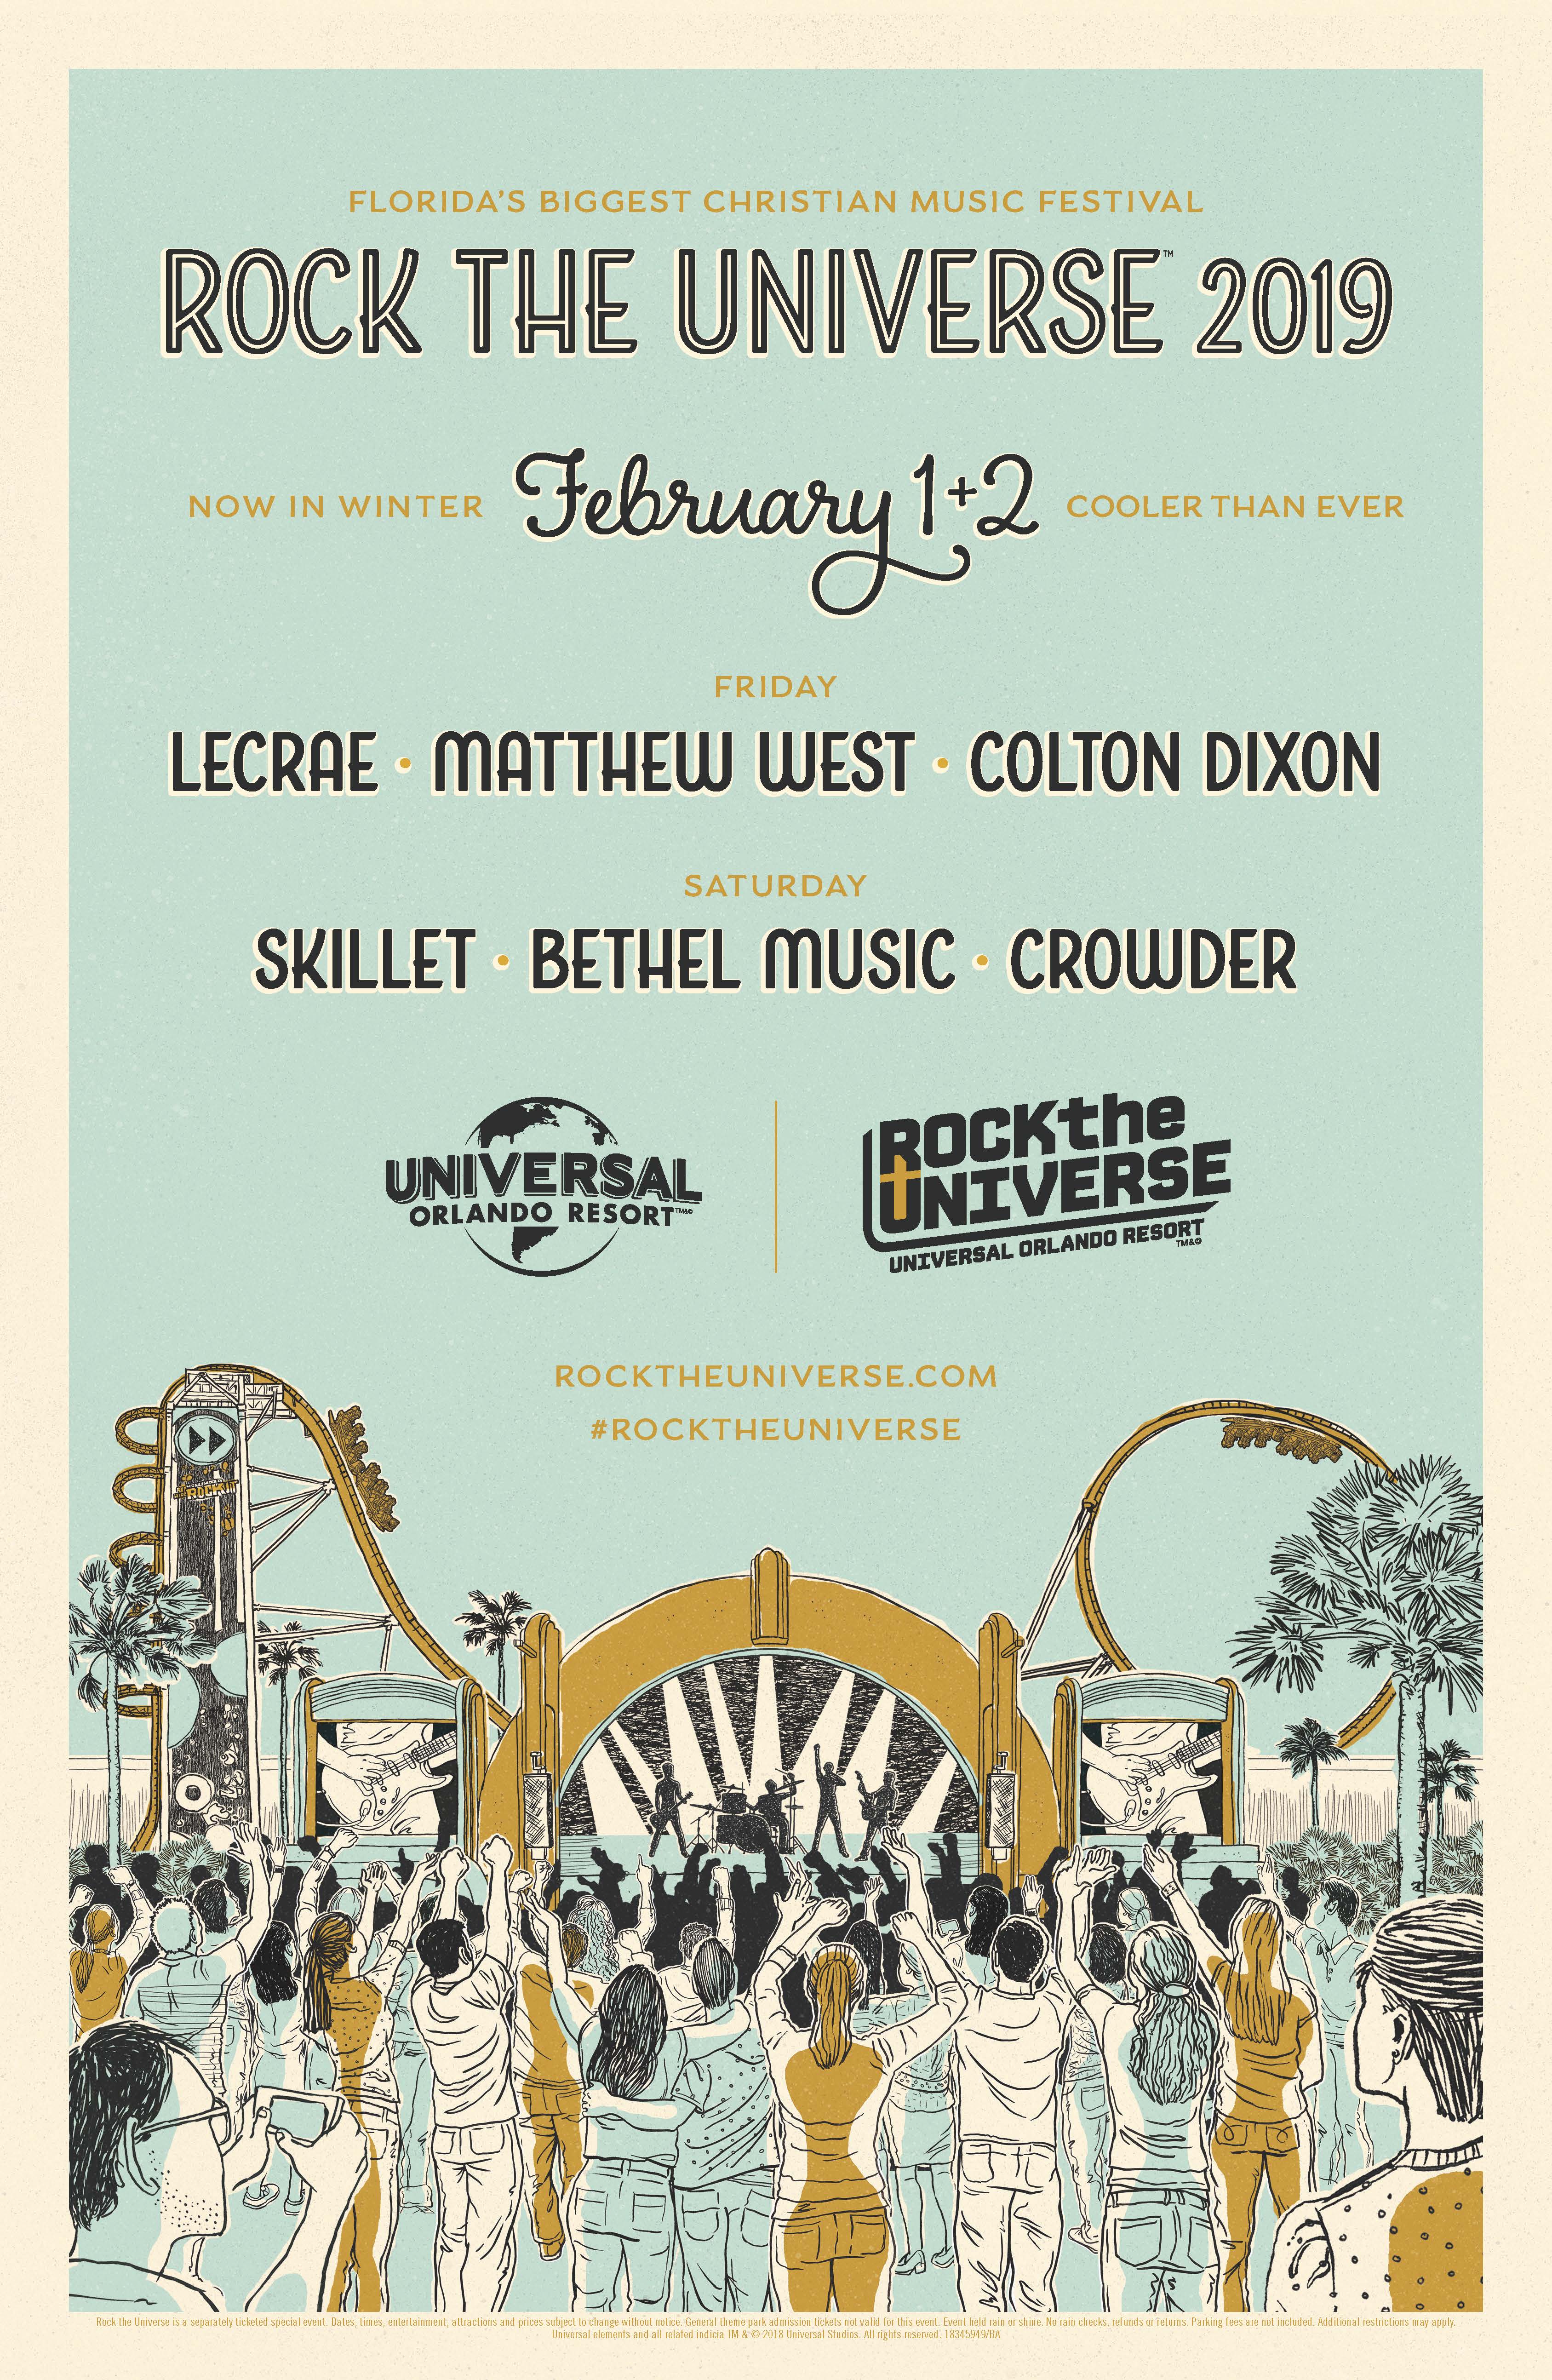 Rock the Universe Kicks Off February 1 at Universal Orlando Skillet